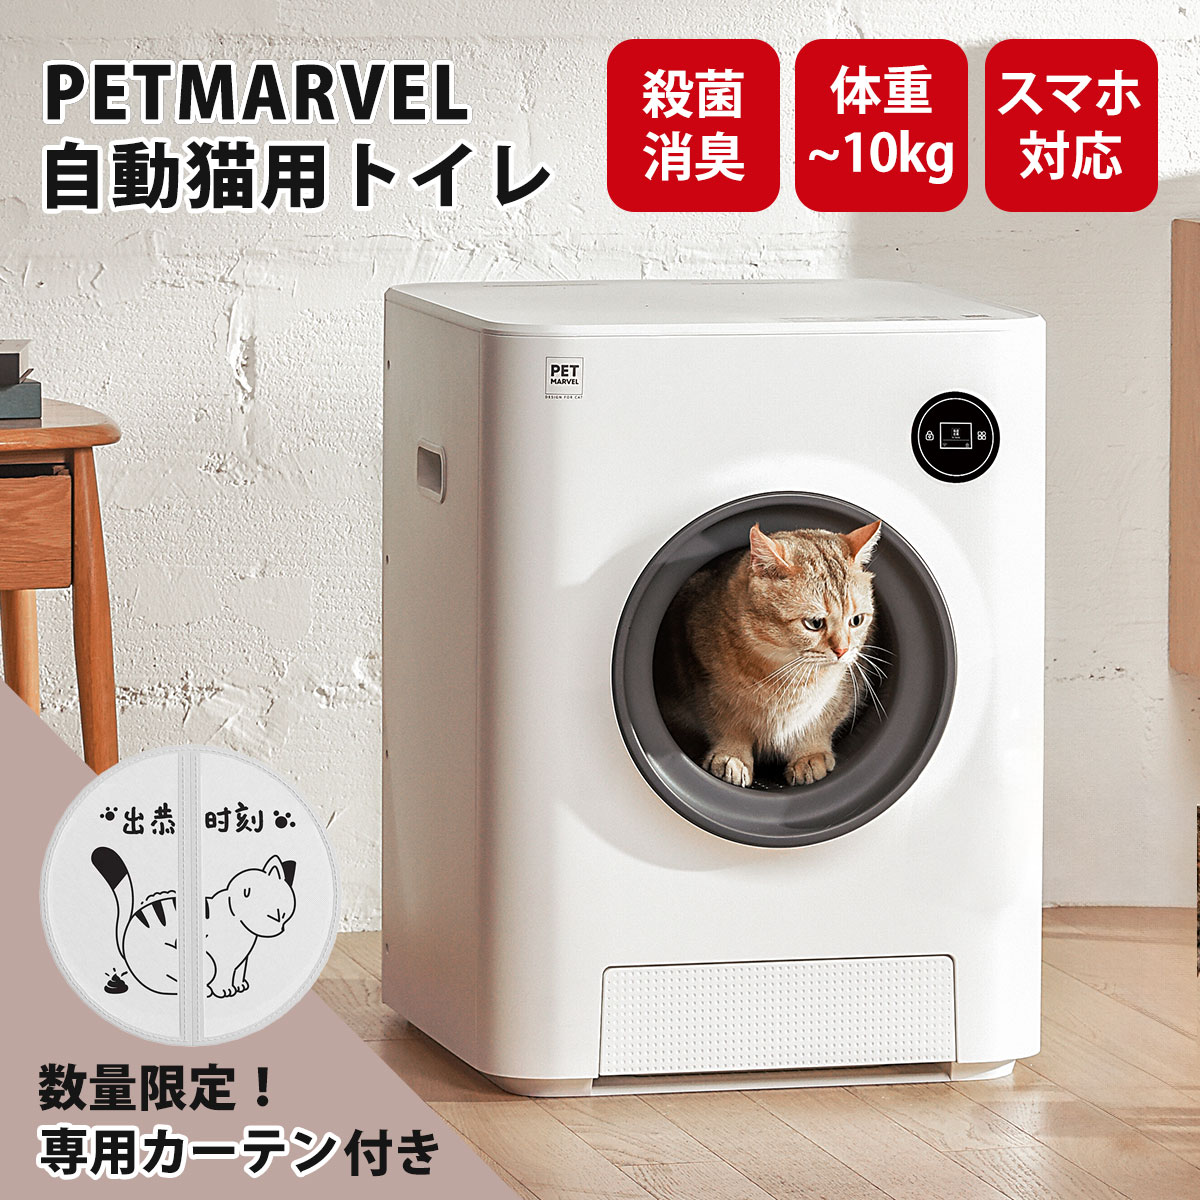 PET MARVEL】 自動猫用トイレ 猫トイレ 自動ペットトイレ ネコトイレ 